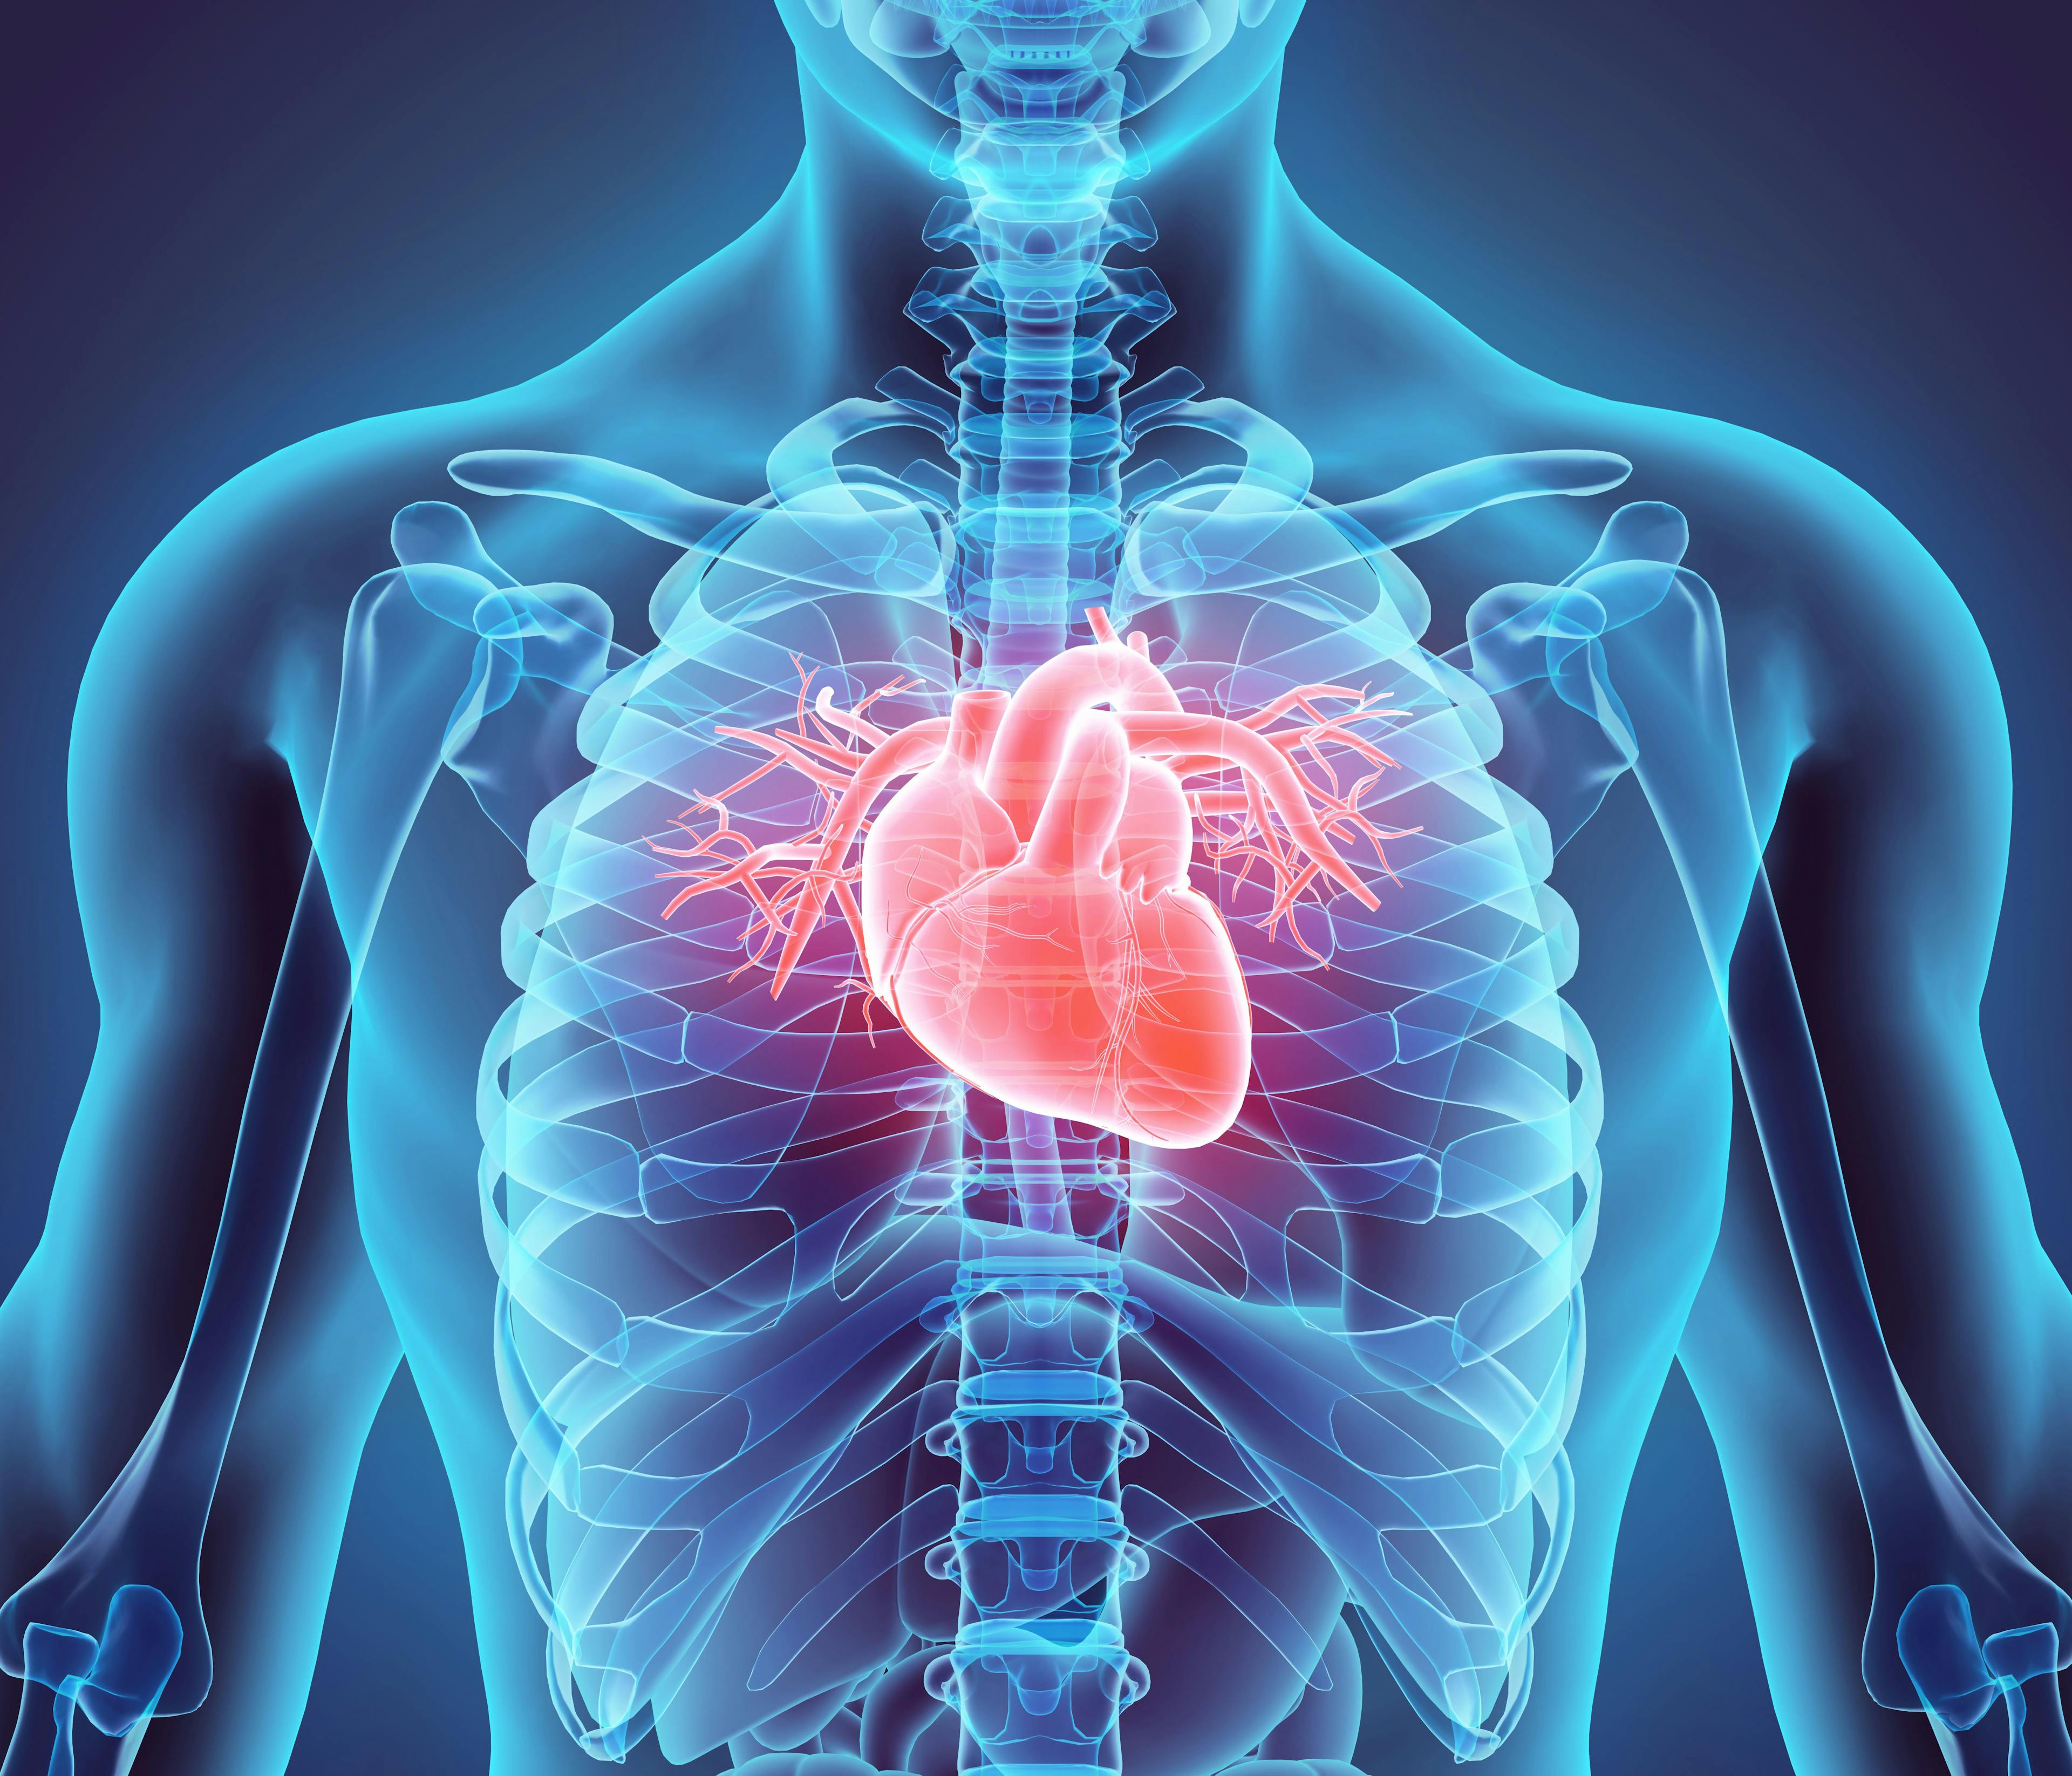 3D illustration of Heart, medical concept | Image Credit: yodiyim - stock.adobe.com